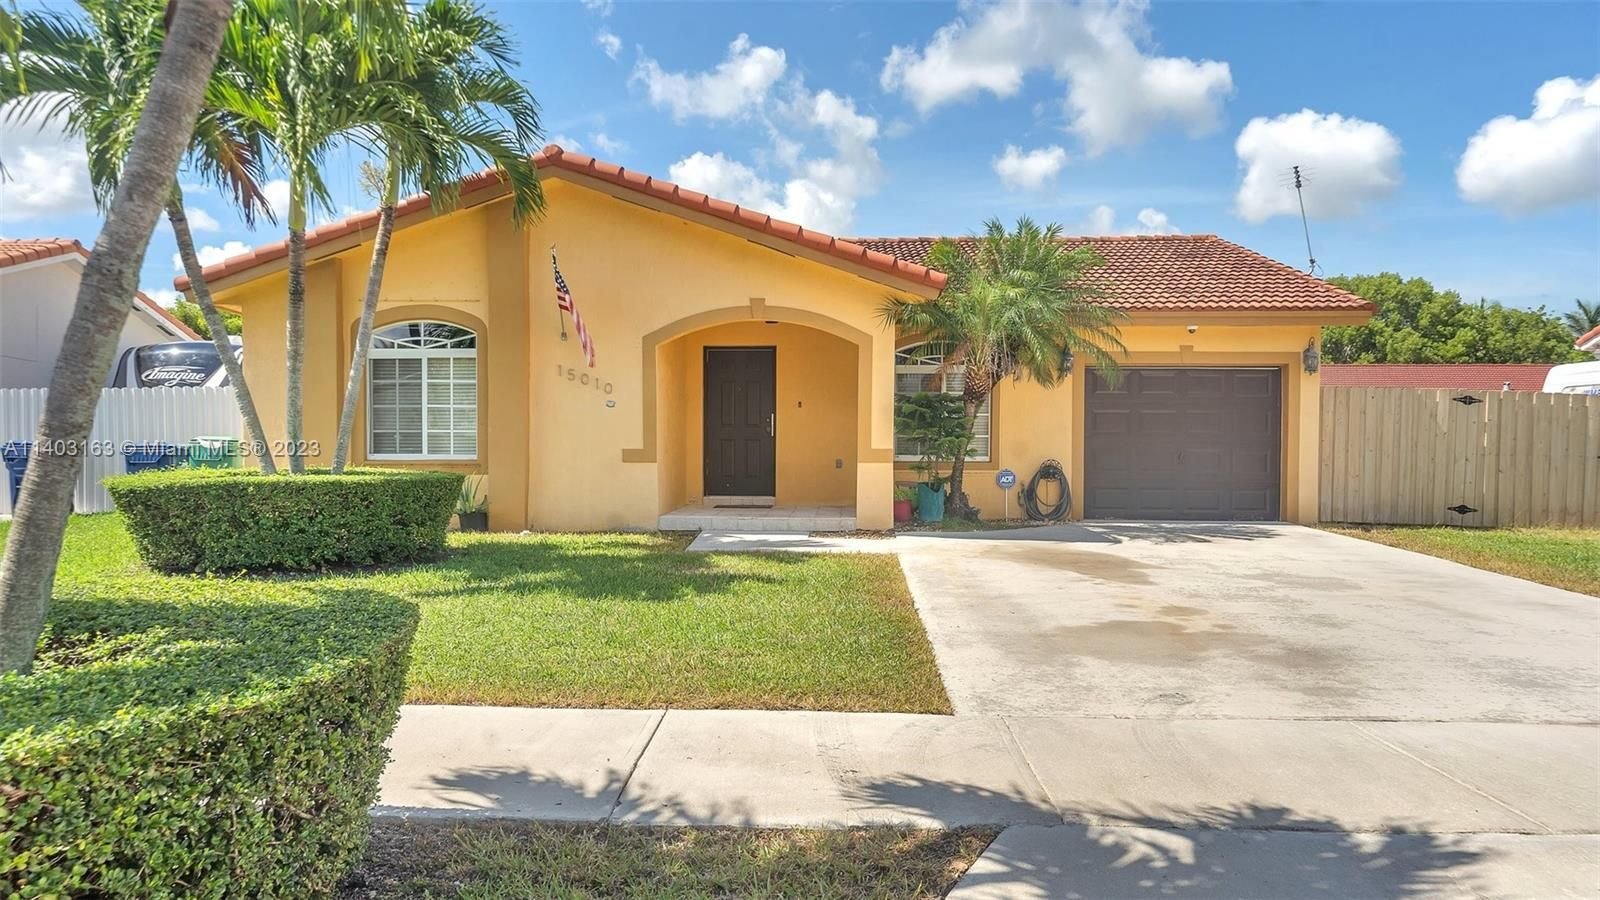 Real estate property located at 15010 178th Ter, Miami-Dade County, Miami, FL